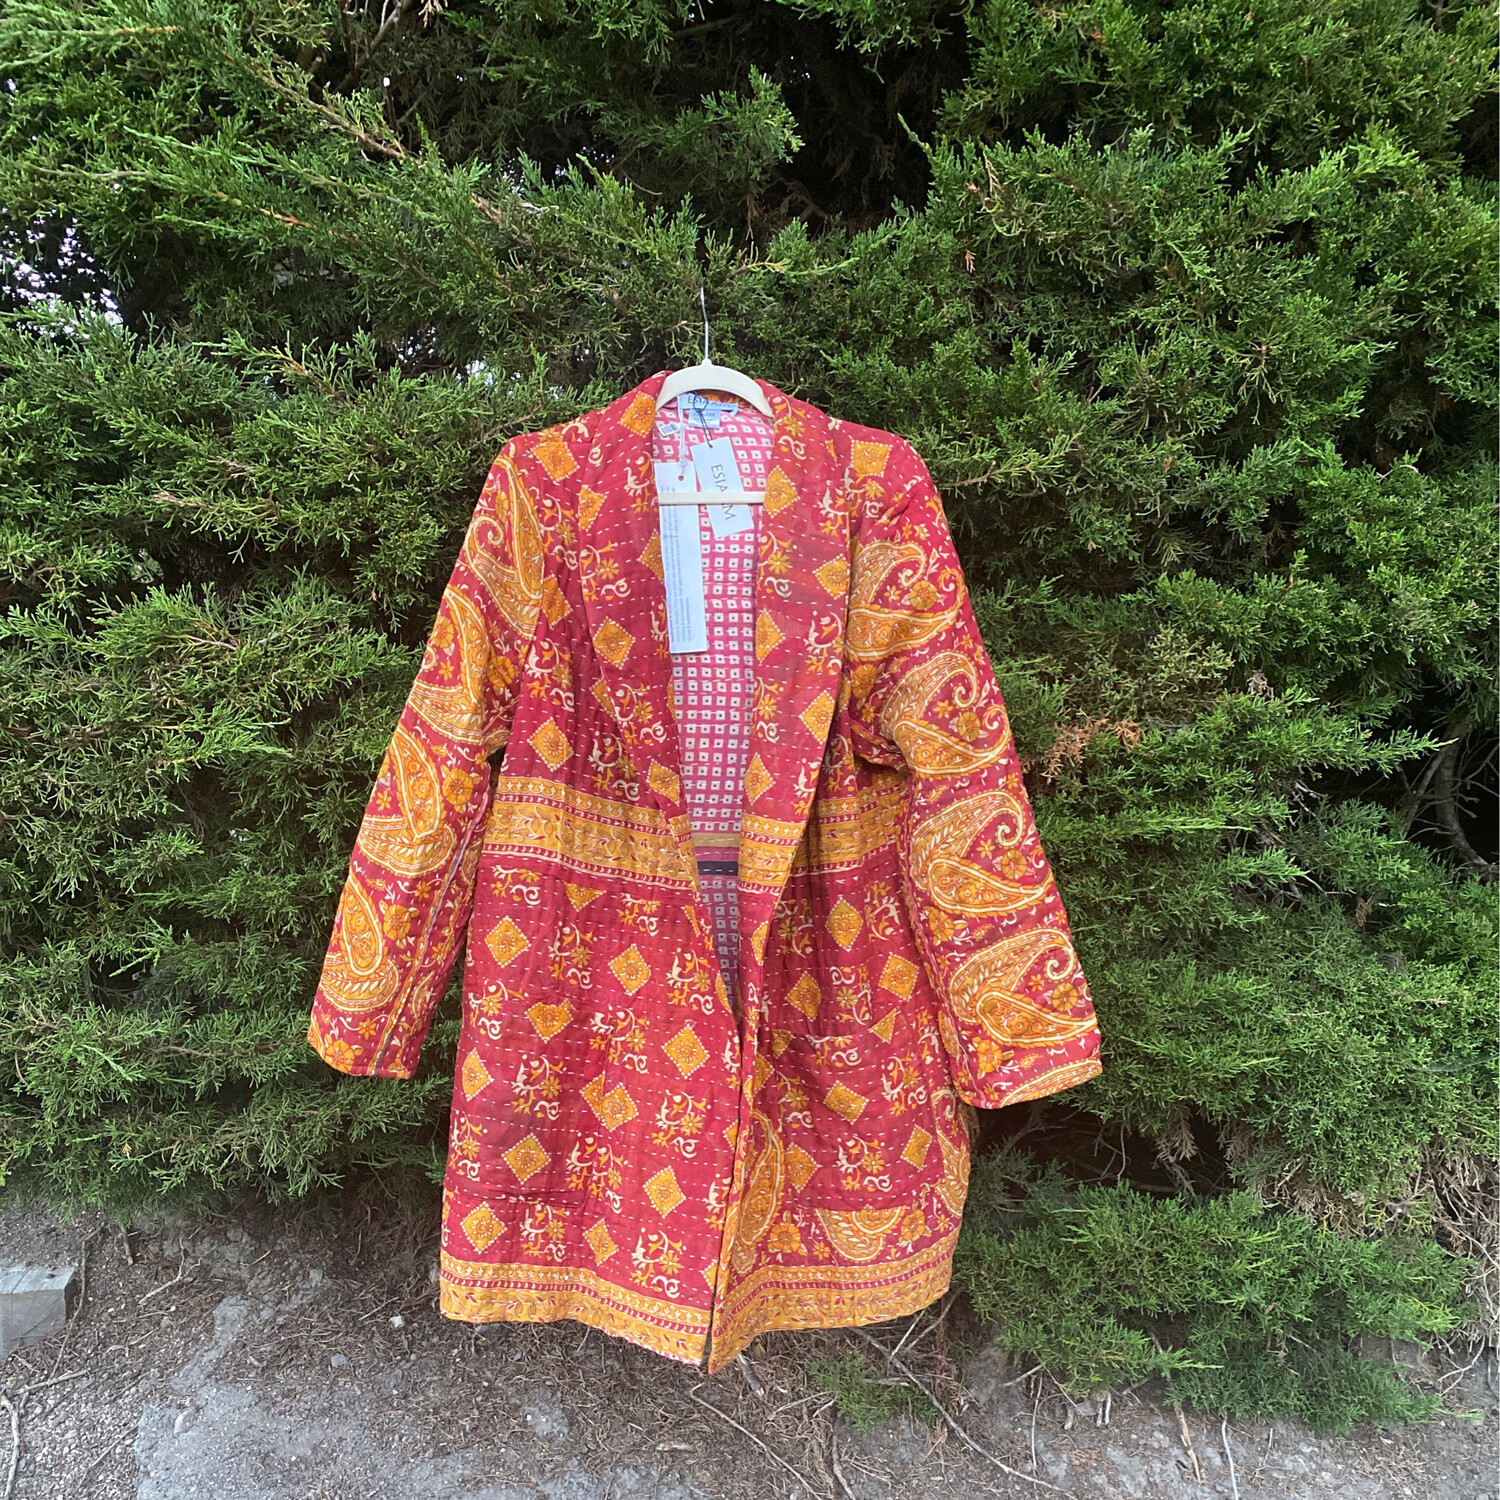 ESIAAM "The Aubrey" (3) Kantha Sari Recycled Quilt Jacket, Large